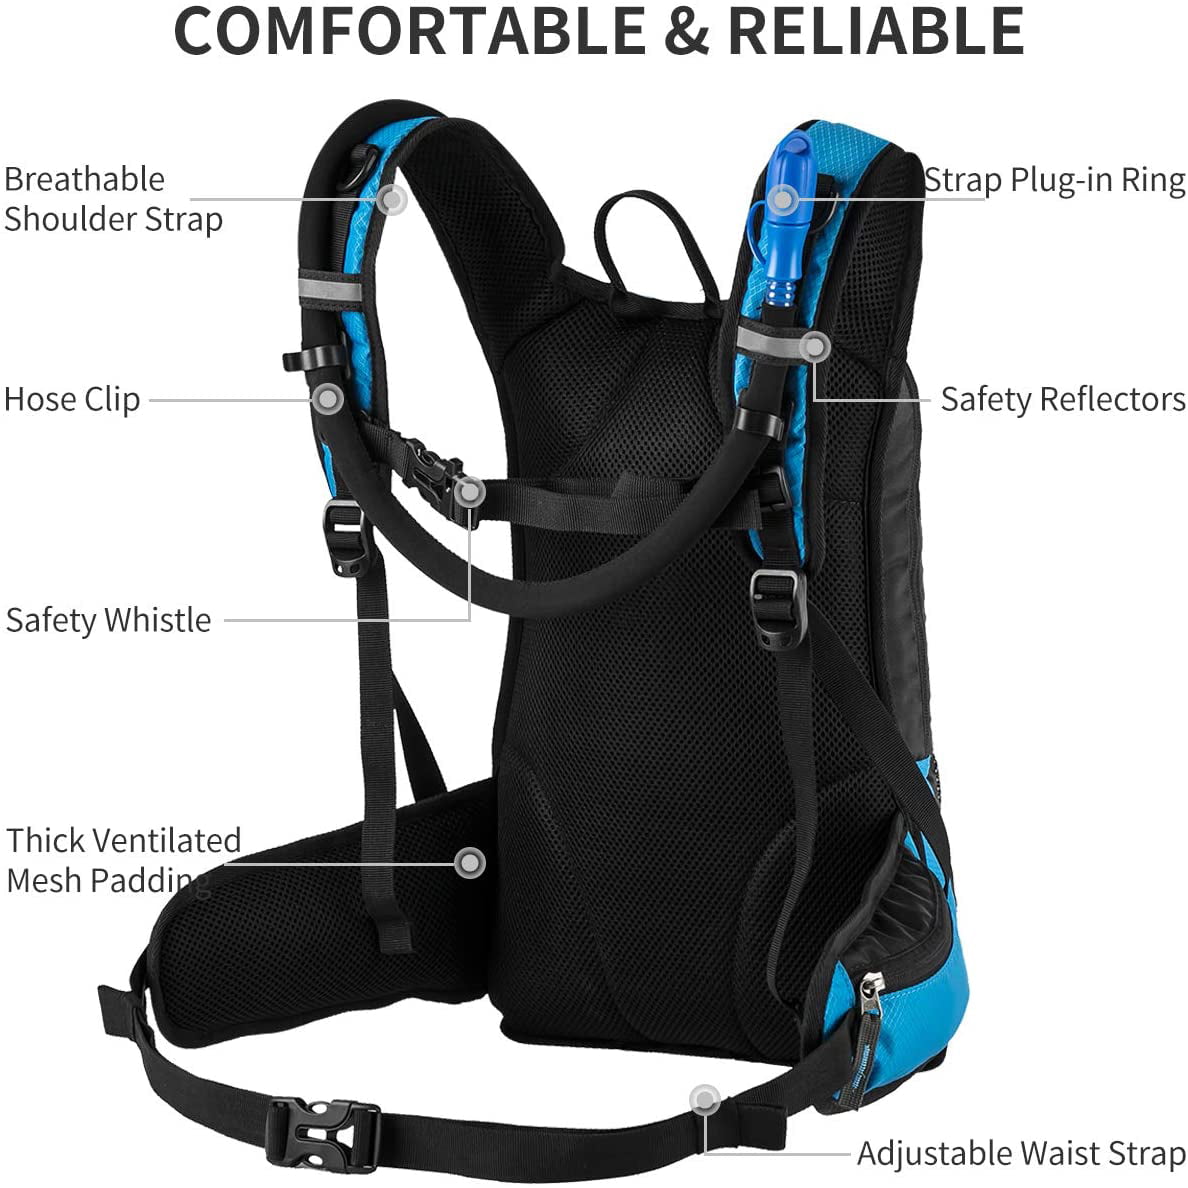 RUPUMPACK® Insulated Hydration Backpack Pack Hiking 15L